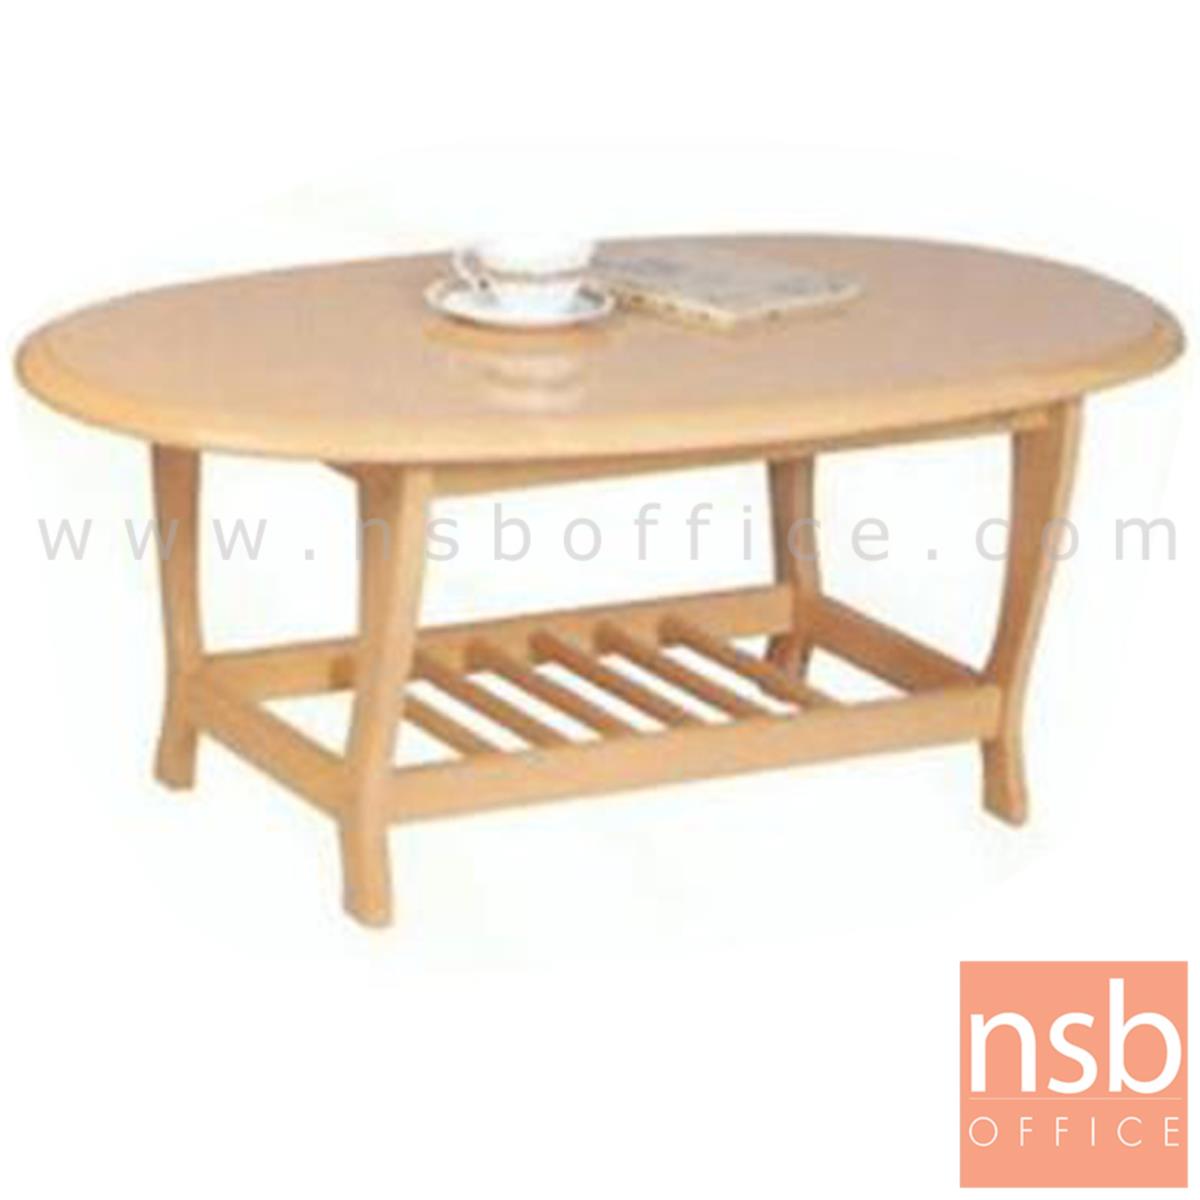 B13A028:โต๊ะกลางไม้ยางพาราทรงวงรี  รุ่น Northcote (นอร์ทโคท) ขนาด 105W cm. 